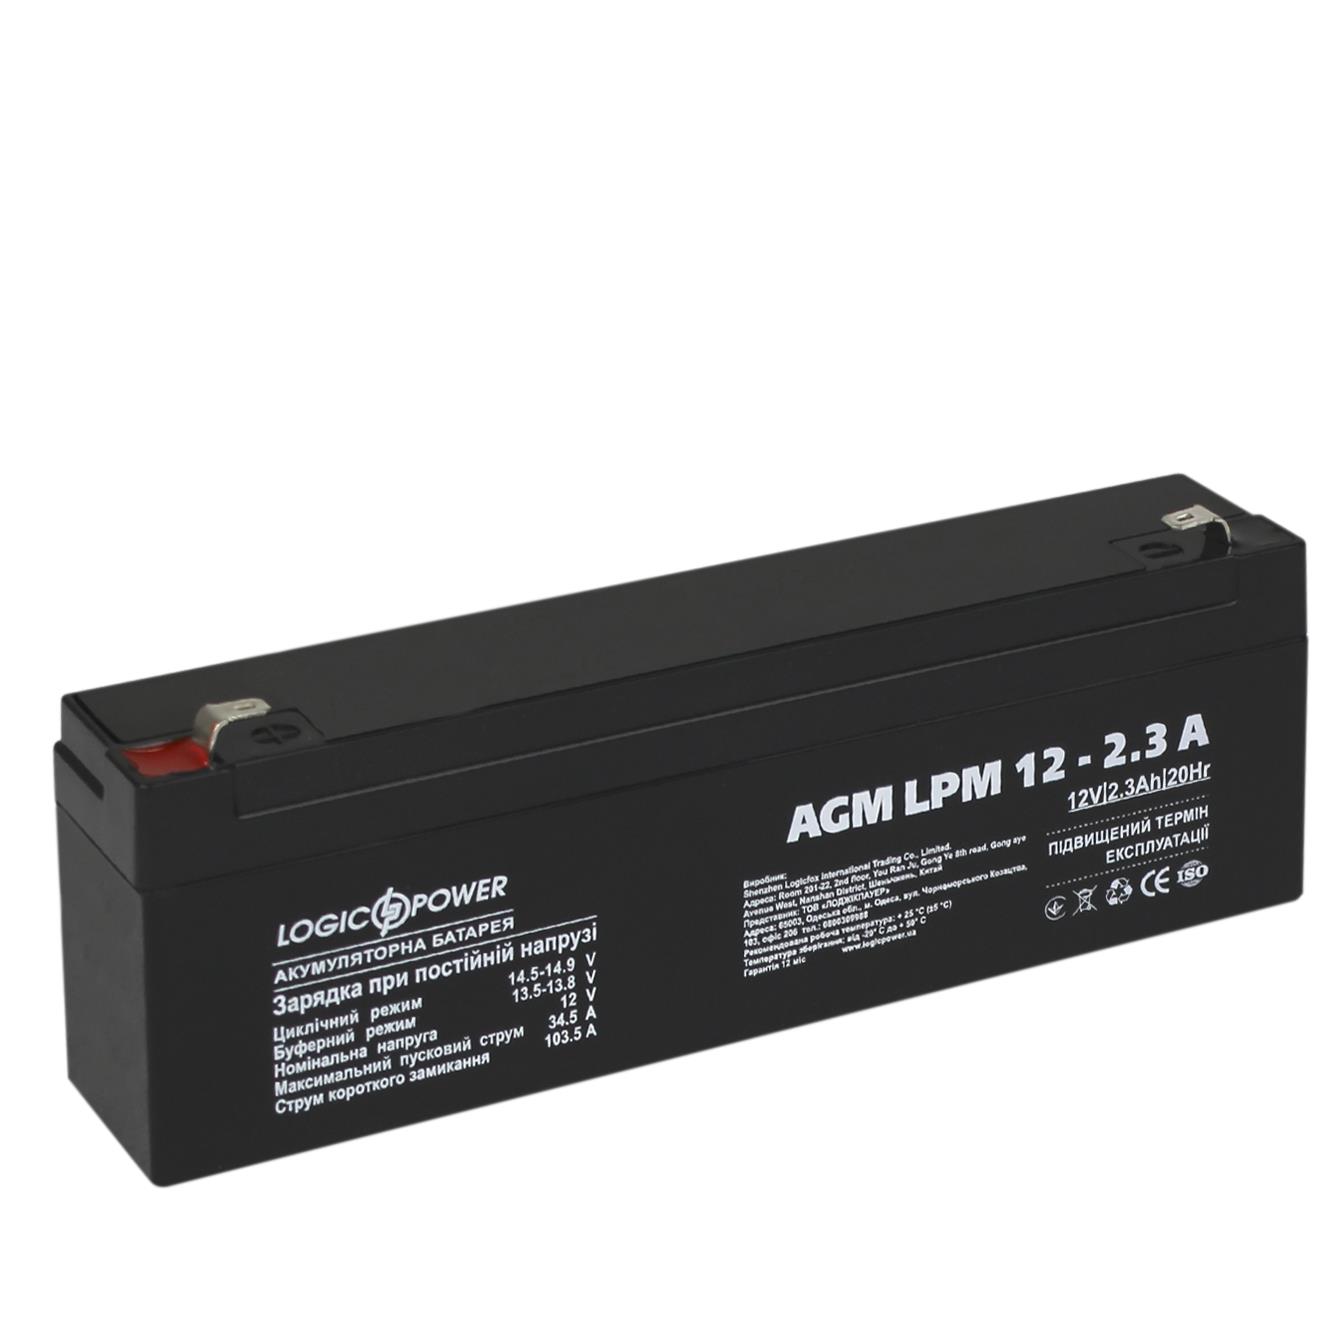 Аккумулятор свинцово-кислотный LogicPower AGM LPM 12V - 2.3 Ah (4132) цена 439.20 грн - фотография 2